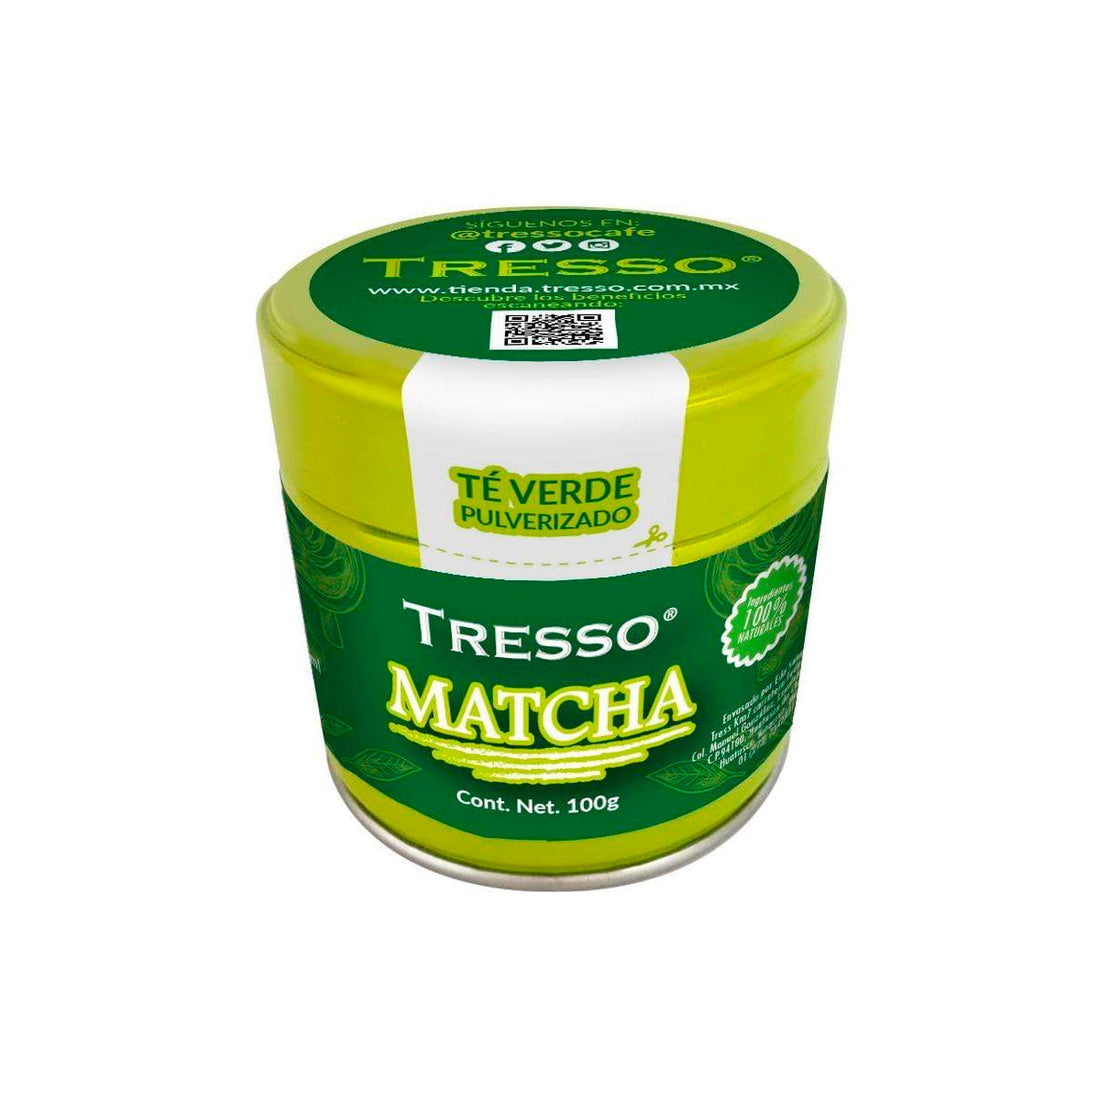 Té Verde (Pulverizado): “Matcha” 100 G Té TRESSO® 